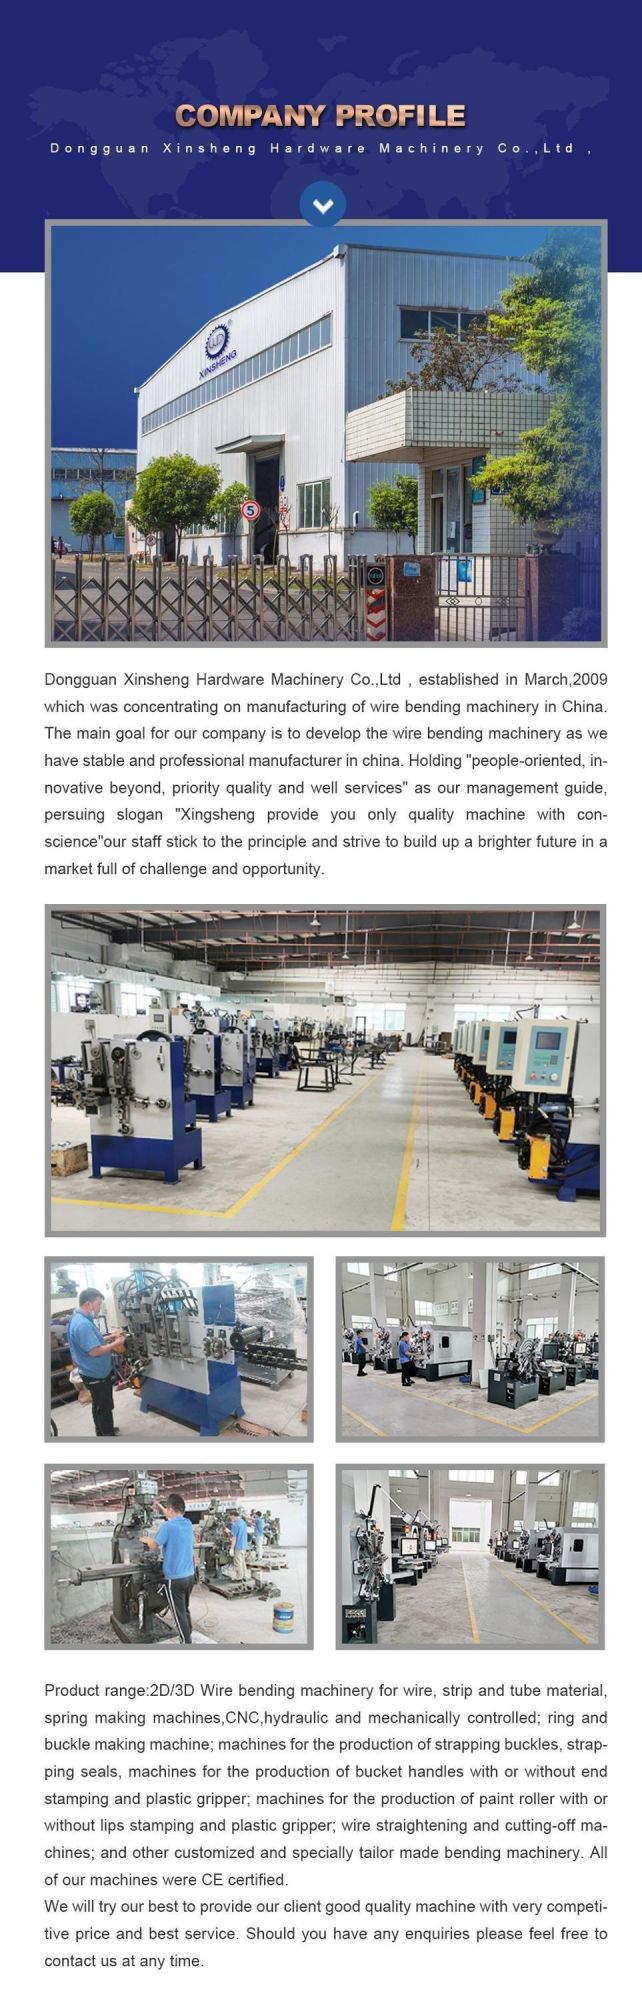 High Precision 3D CNC Wire Bending Machine Made in Dongguan